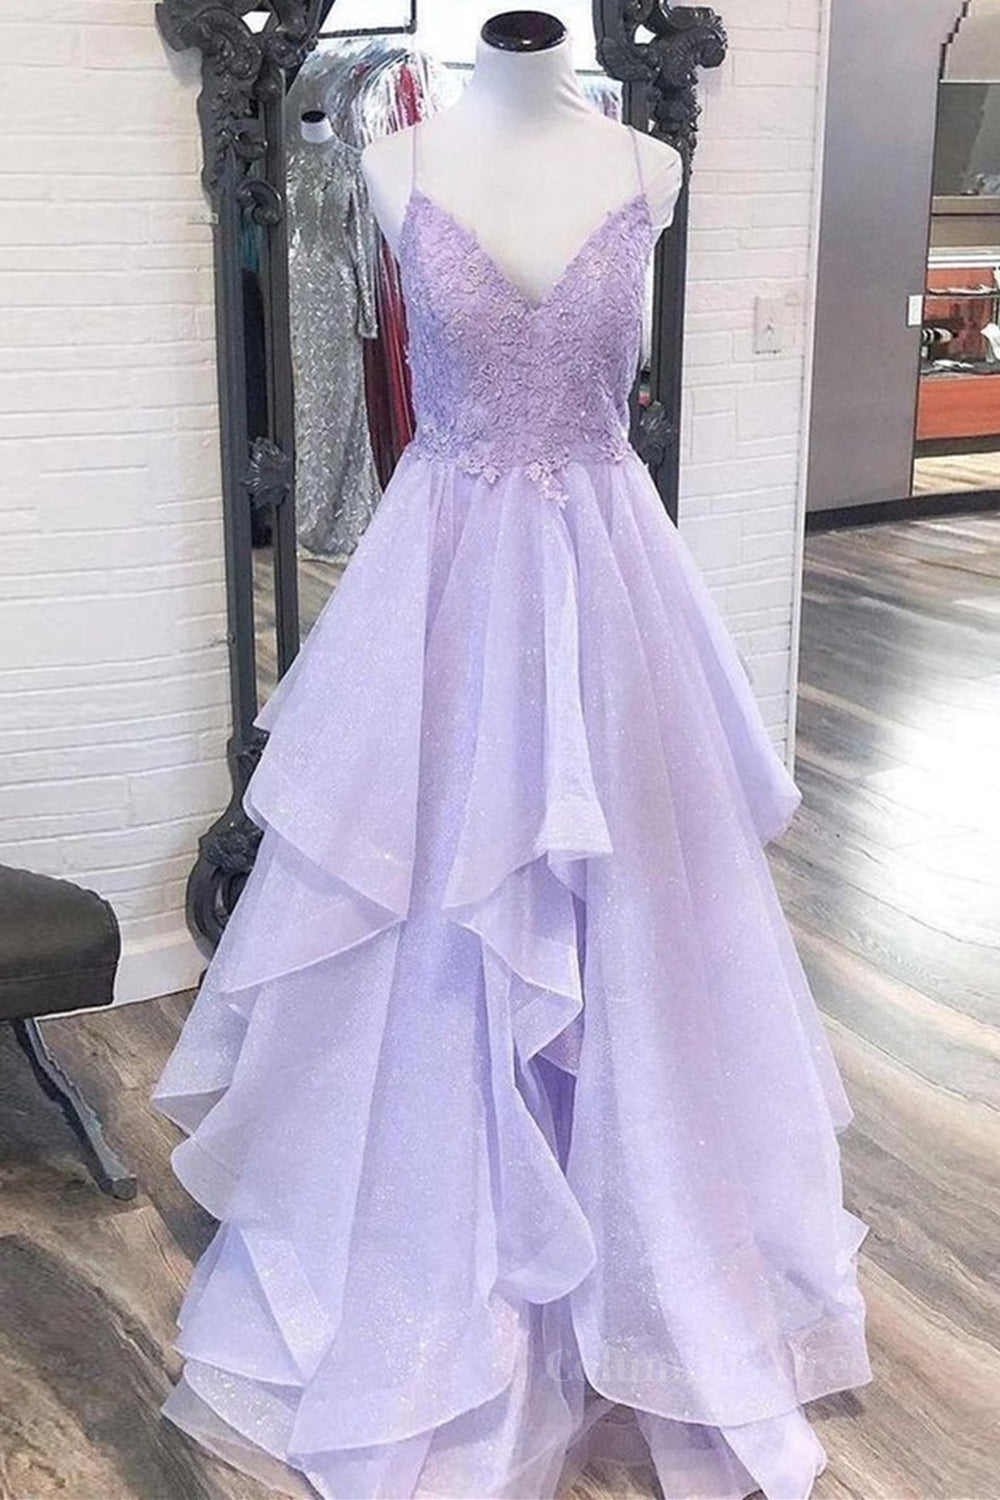 Cute Dress Outfit, Shiny V Neck Purple Lace Long Prom Dresses, Purple Lace Formal Evening Dresses, Purple Ball Gown